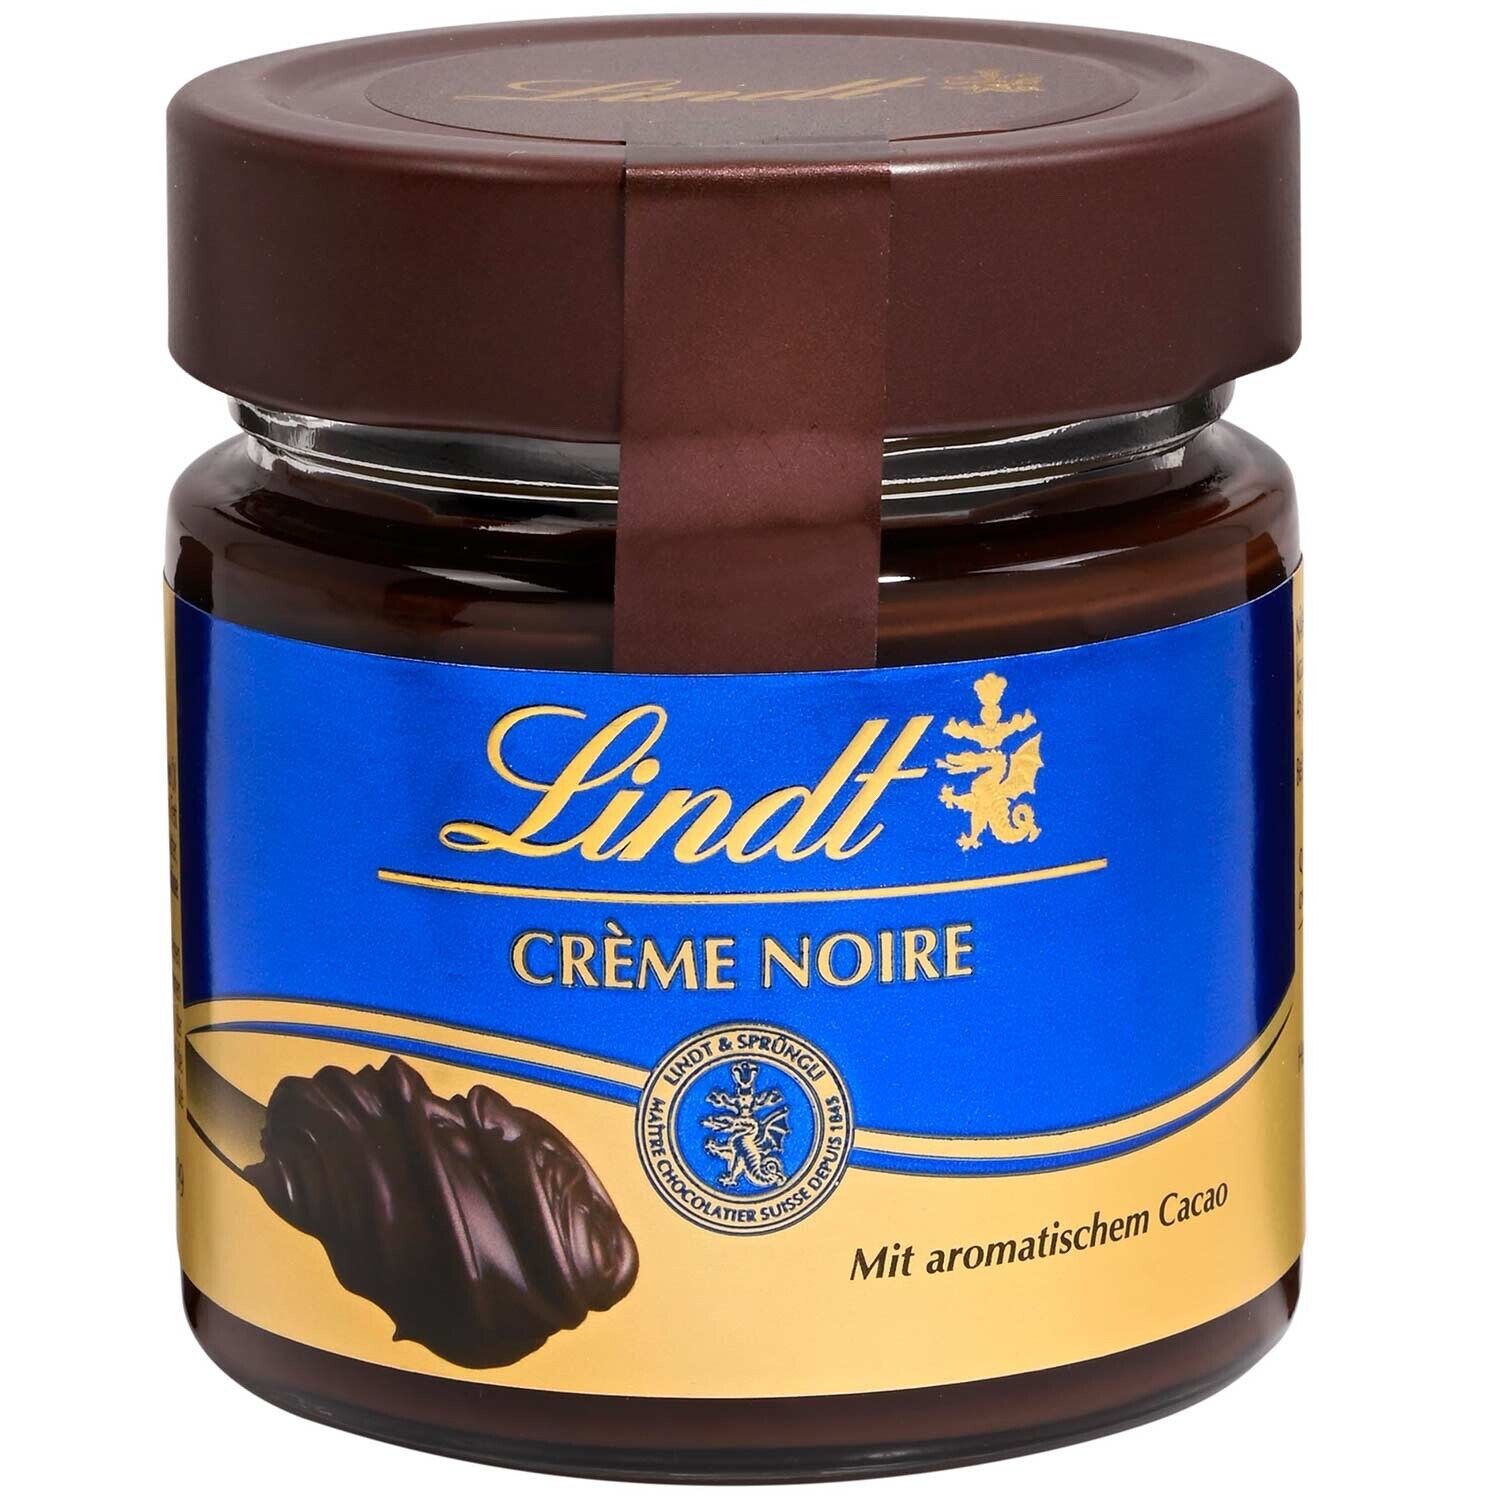 LINDT Creme Noire Dark chocolate BREAD SPREAD 1 jar 220g FREE SHIPPING - $20.78